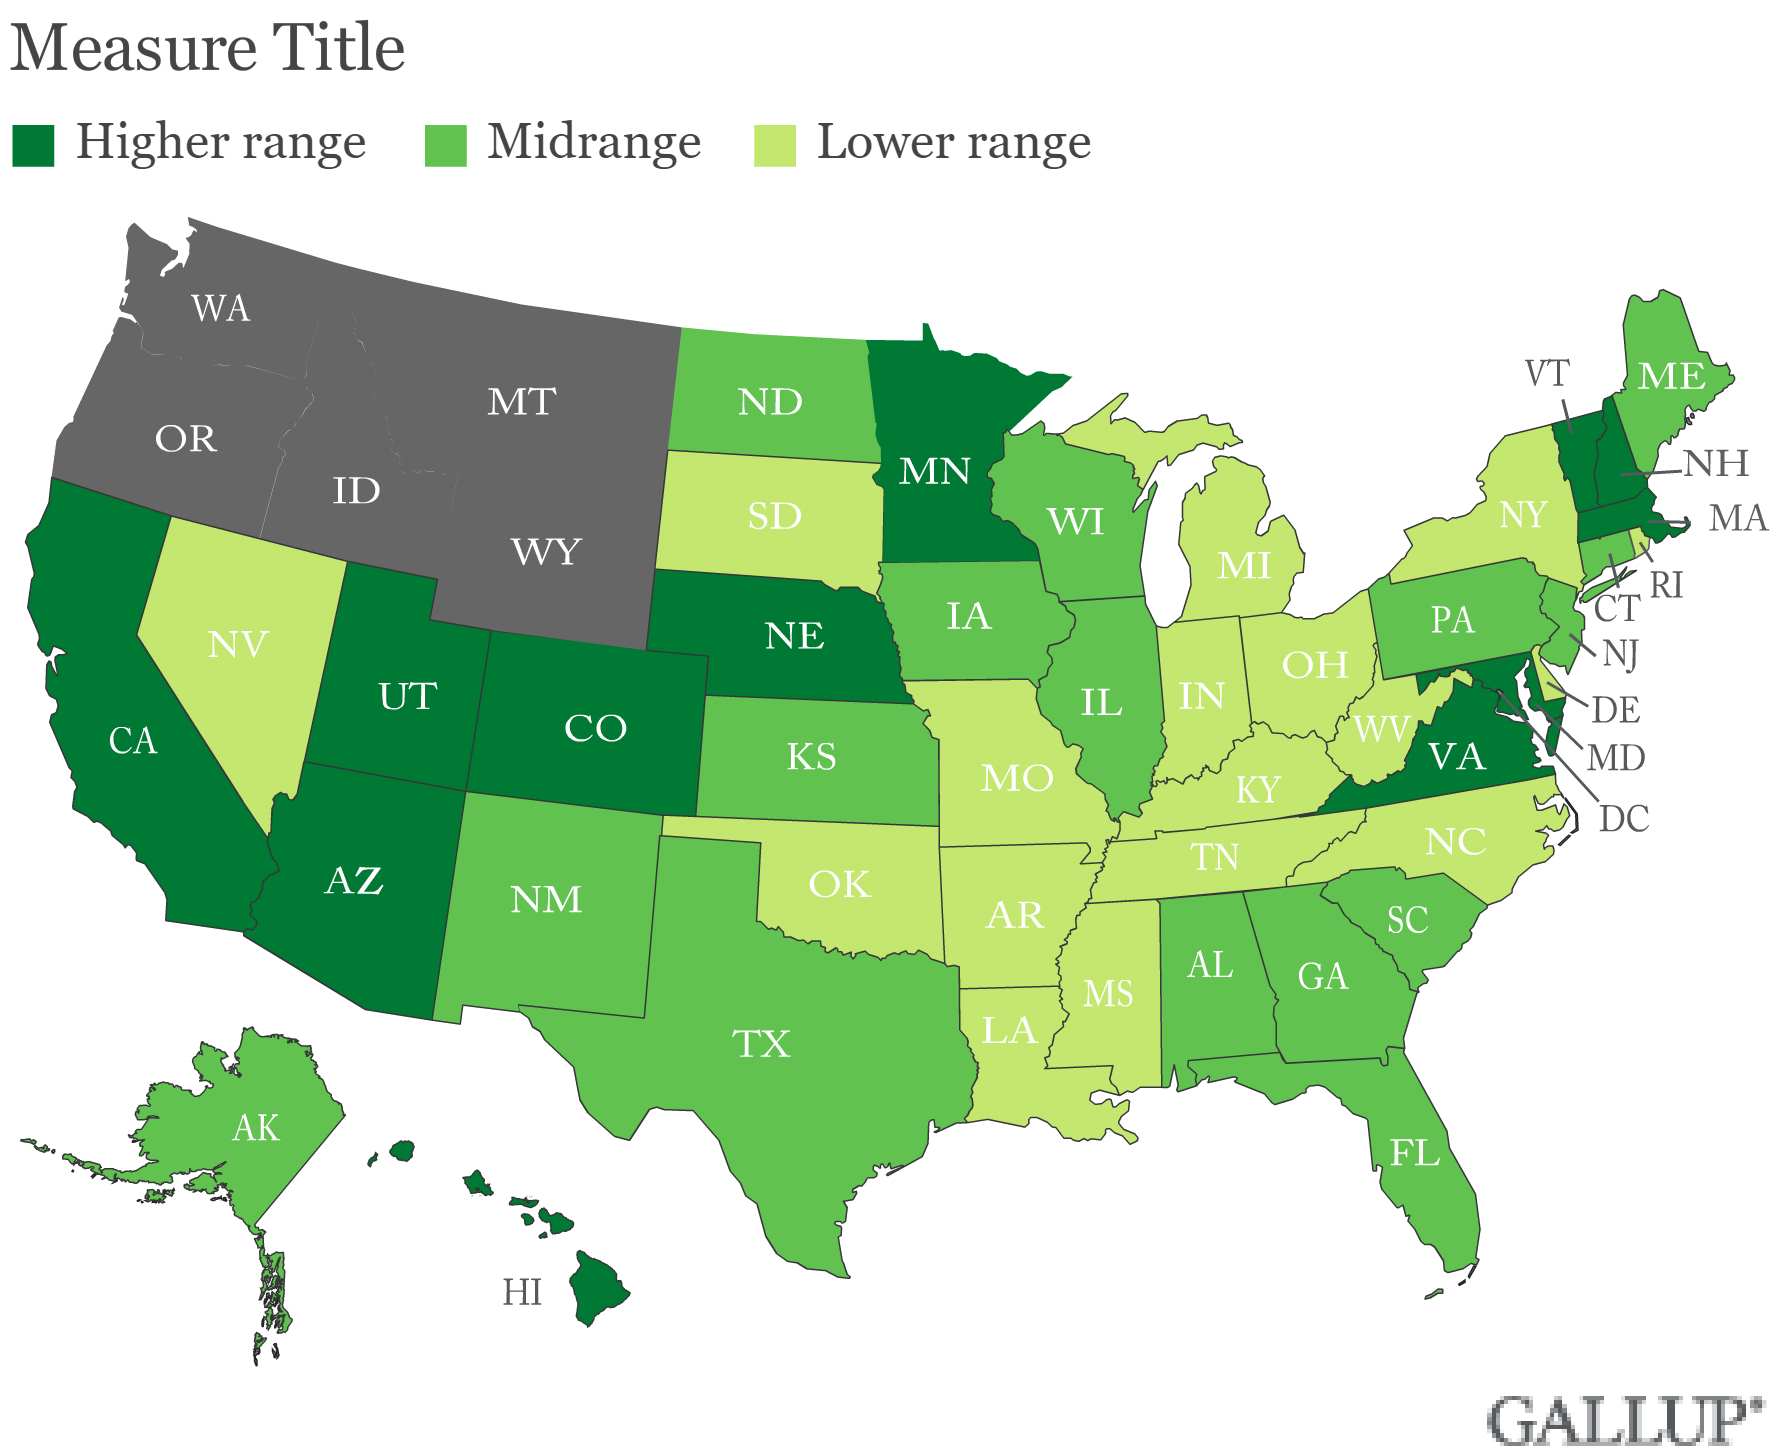 West Virginia scores lowest on Gallup Economic Confidence Index